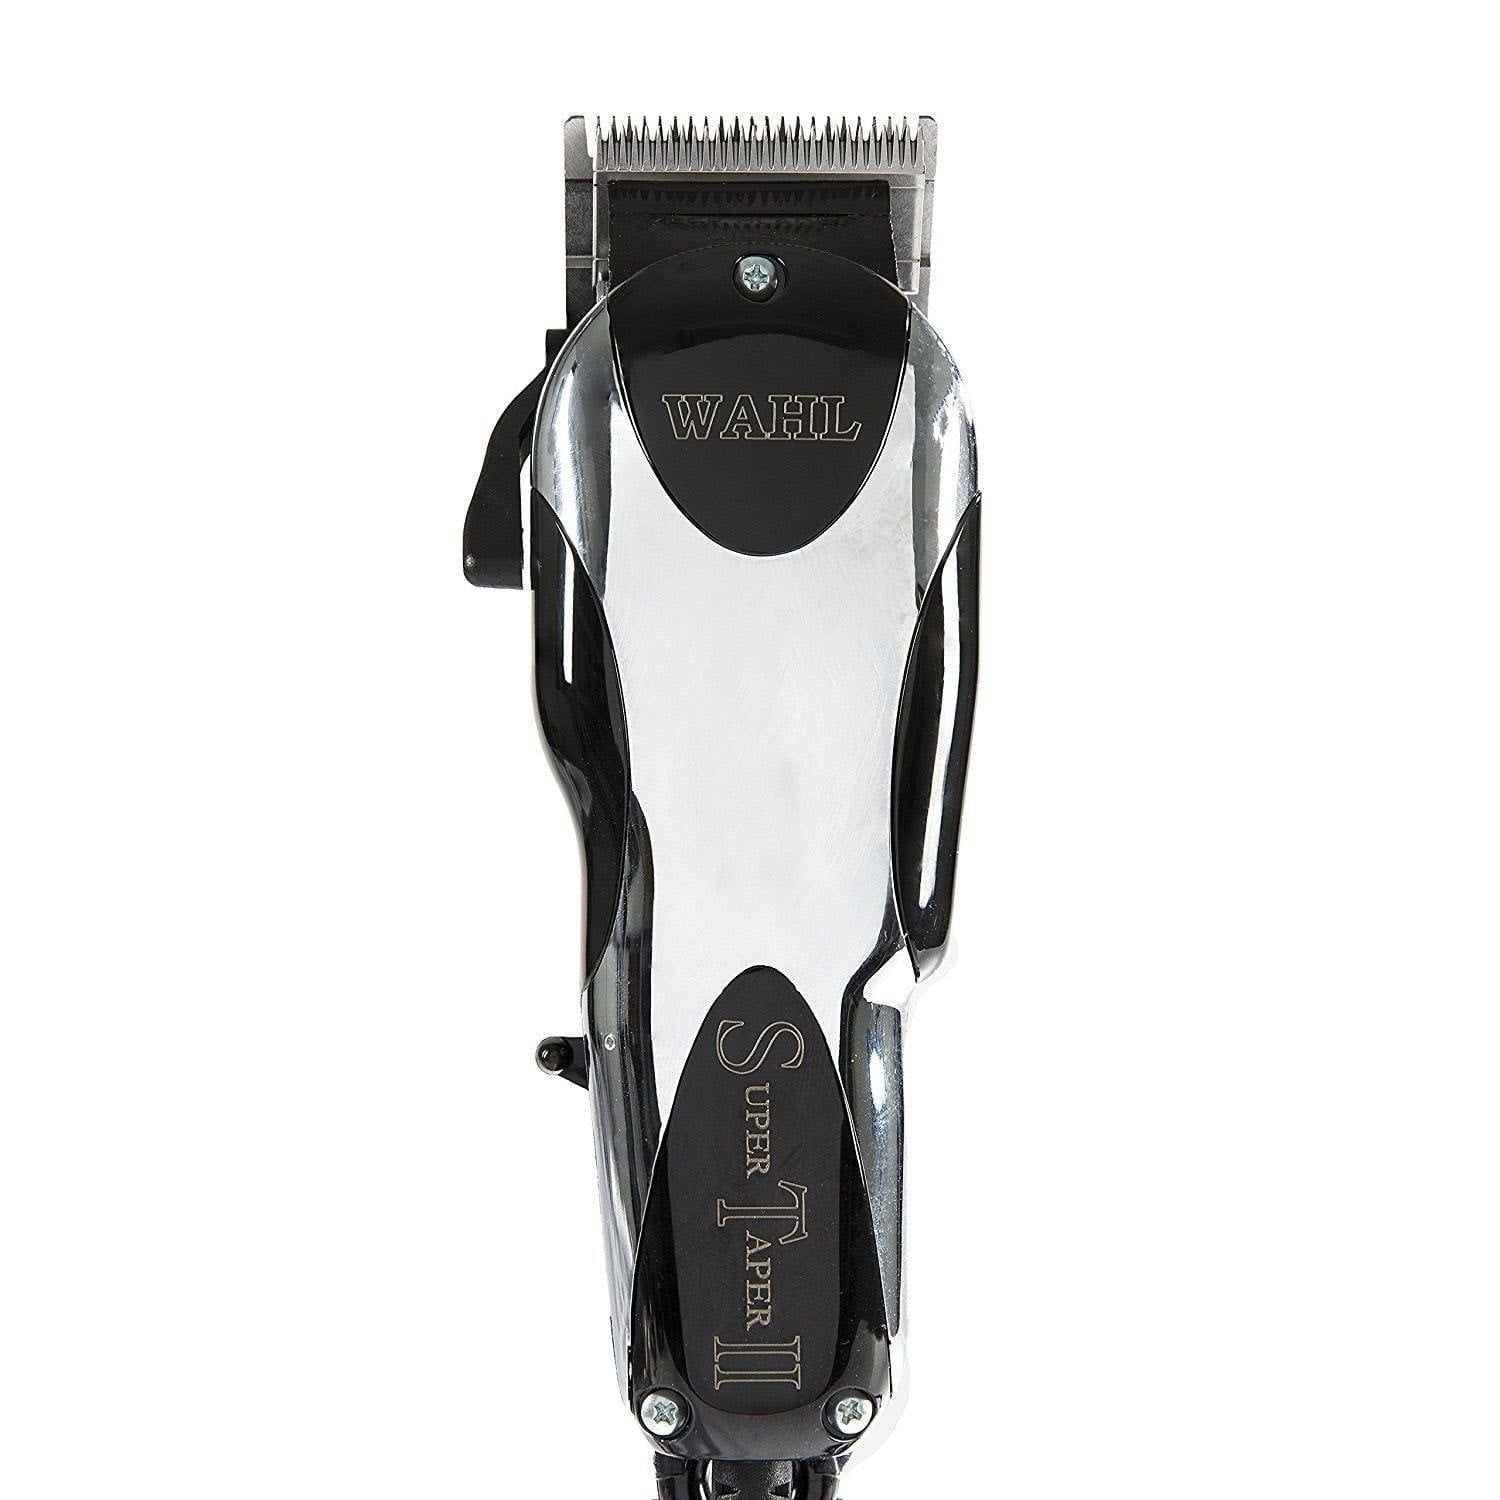 WAHL Professional Super Taper Cordless Taper Hair Clipper 8591